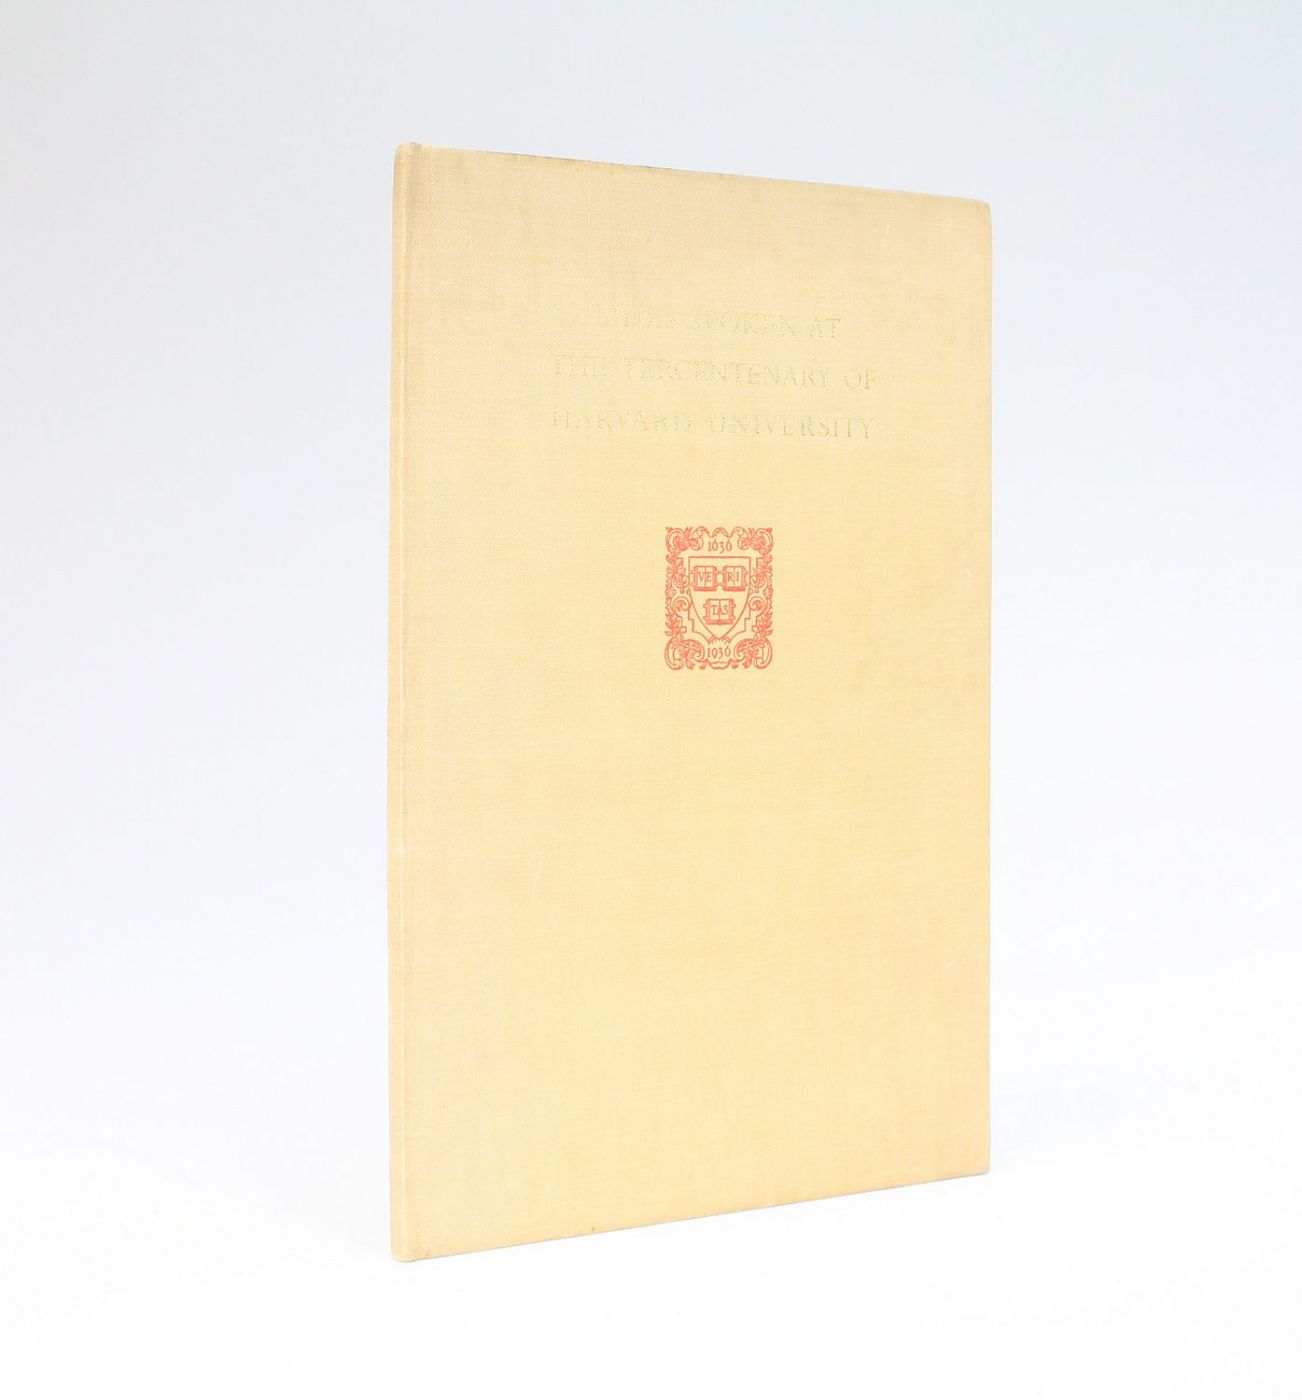 LINES SPOKEN BY JOHN MASEFIELD AT THE TERCENTENARY OF HARVARD UNIVERSITY 18TH SEPTEMBER 1936 -  image 1